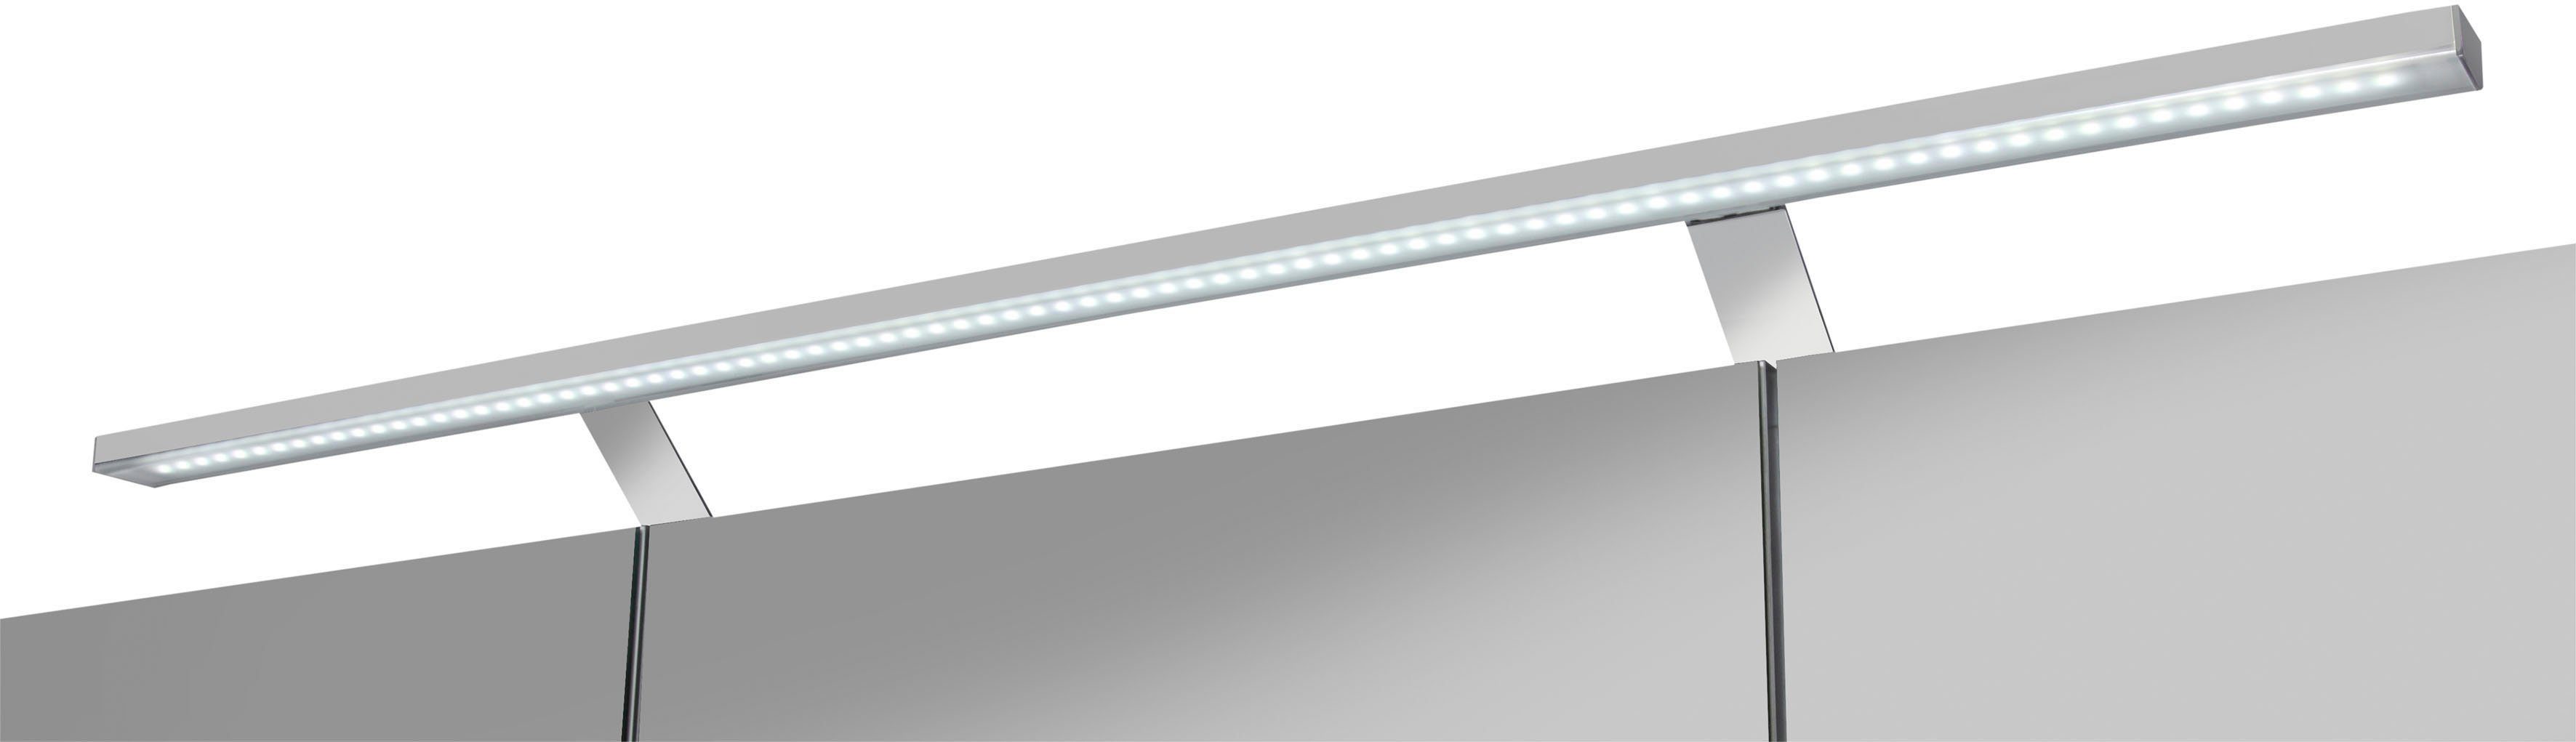 100 basaltgrau | Schalter-/Steckdosenbox cm, 3-türig, Spiegelschrank welltime LED-Beleuchtung, Torino basaltgrau Breite